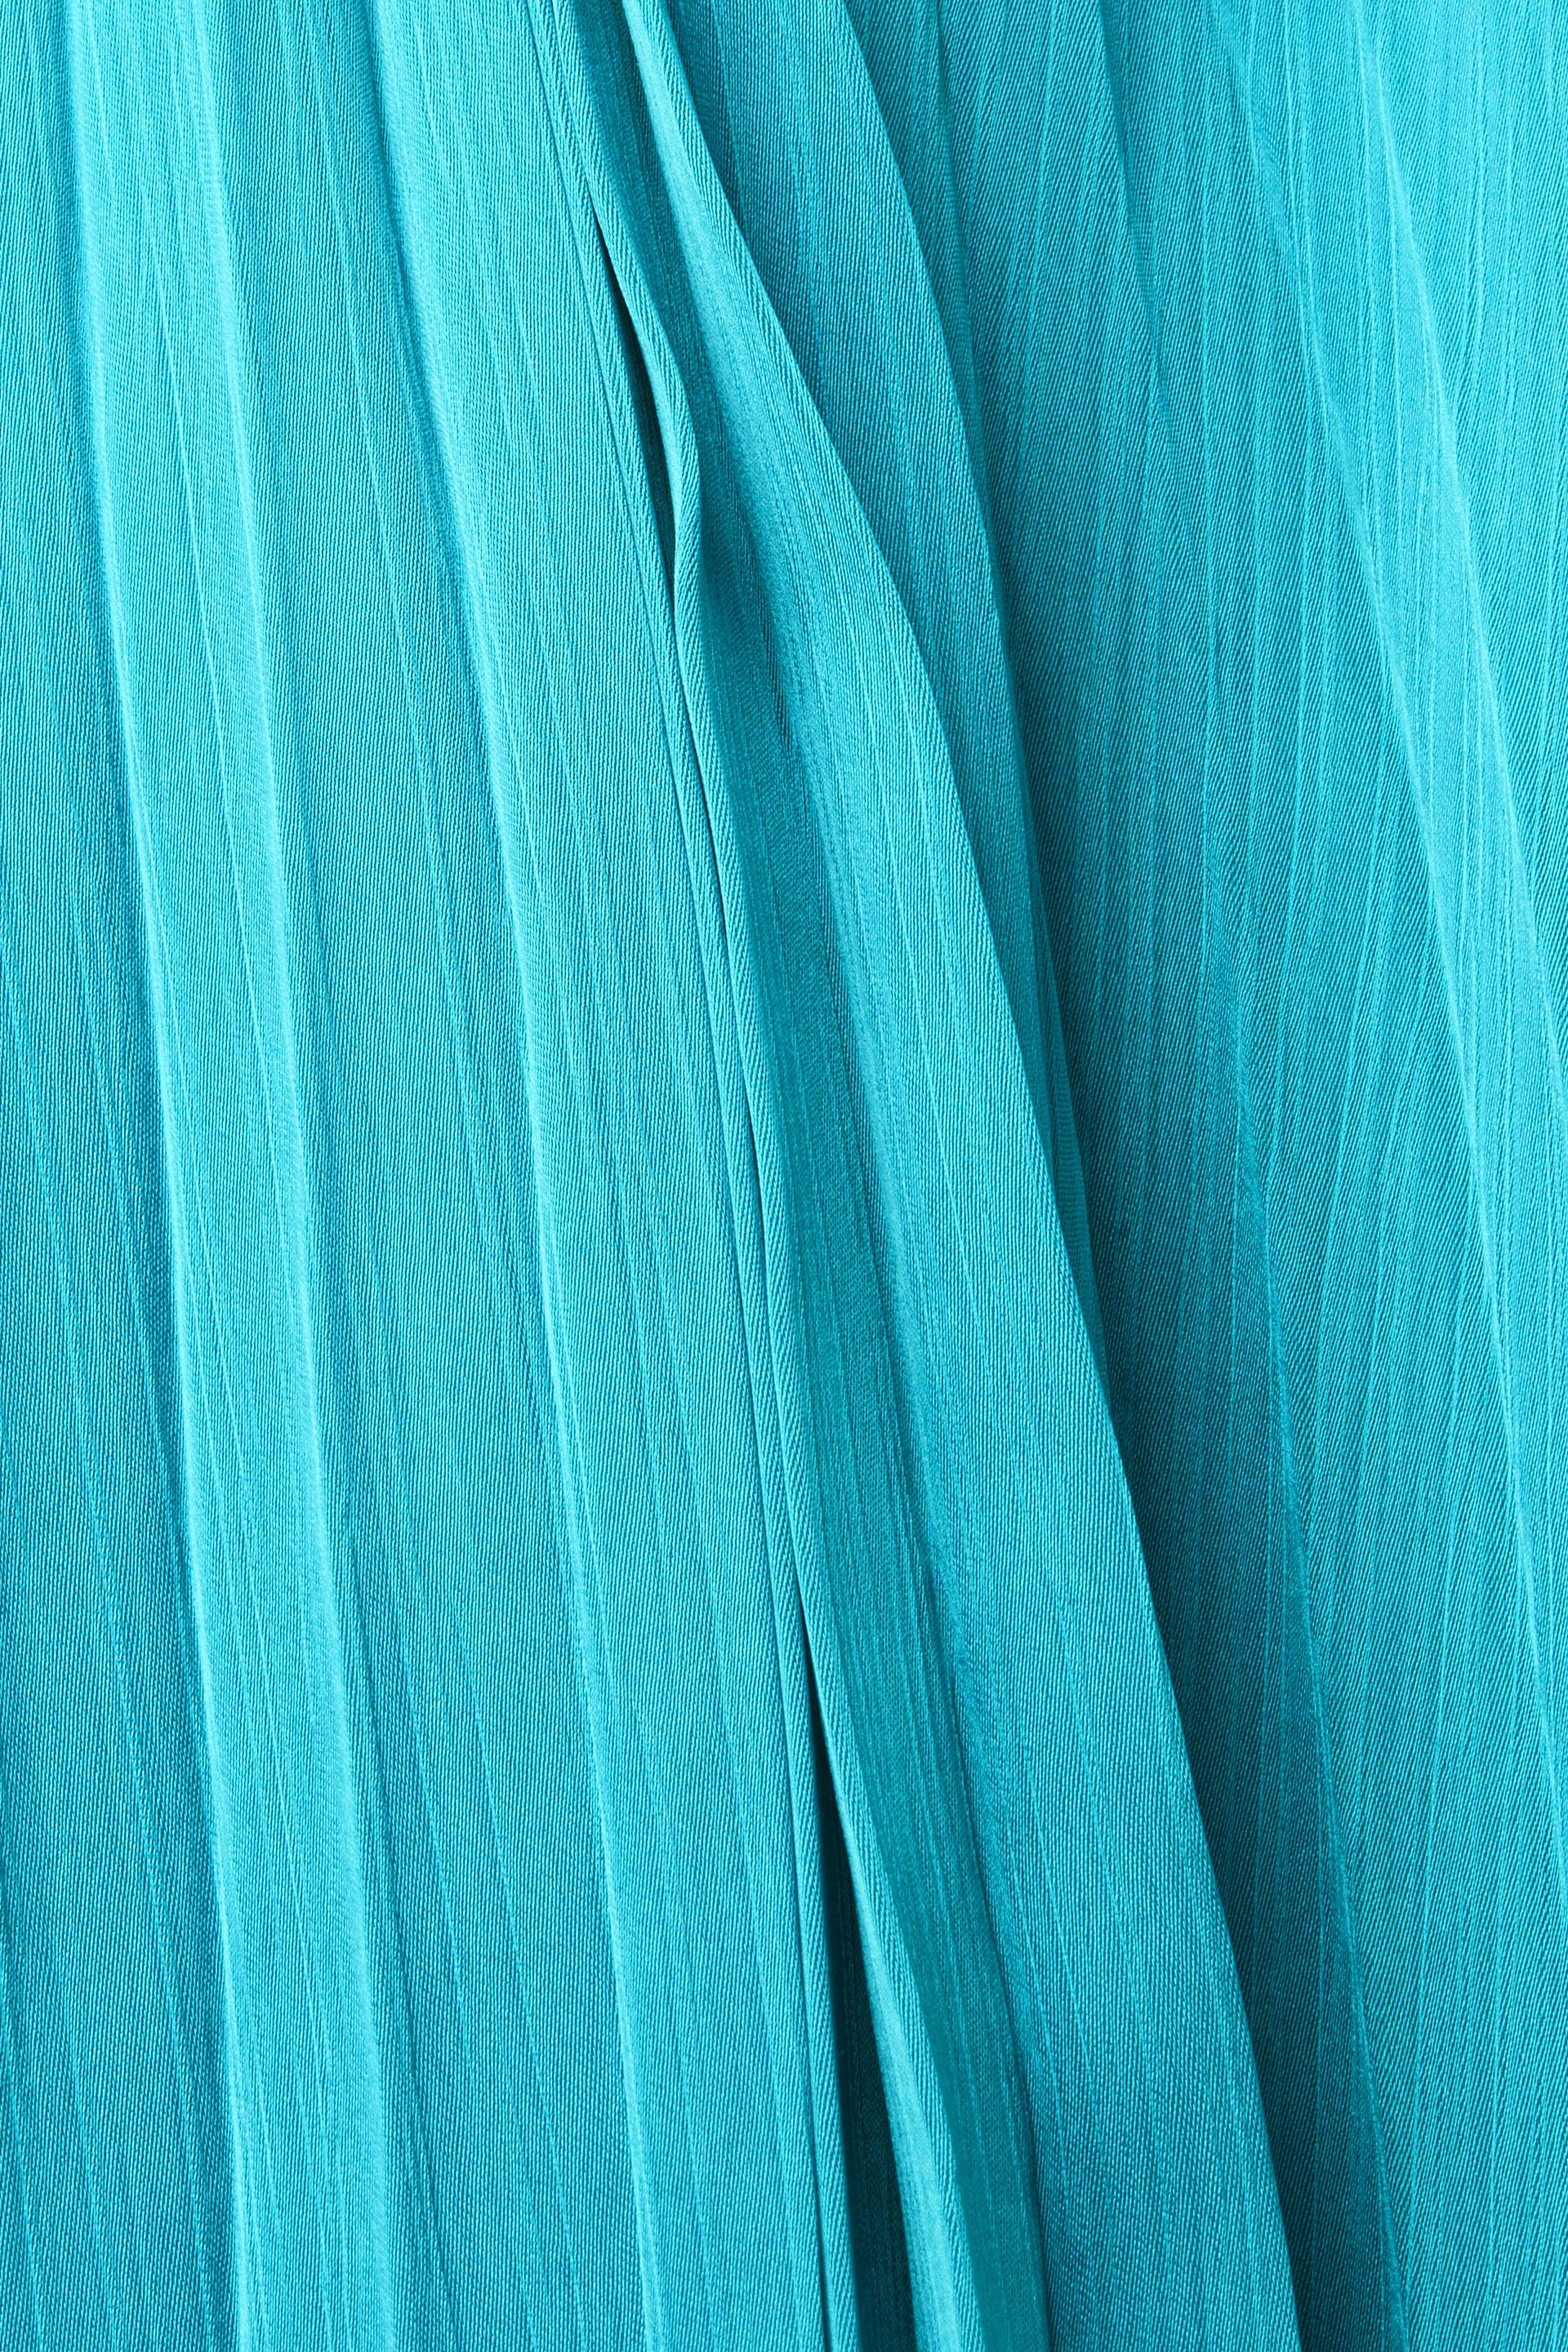 Esprit - Abito in raso plissettato, Azzurro turchese, large image number 3